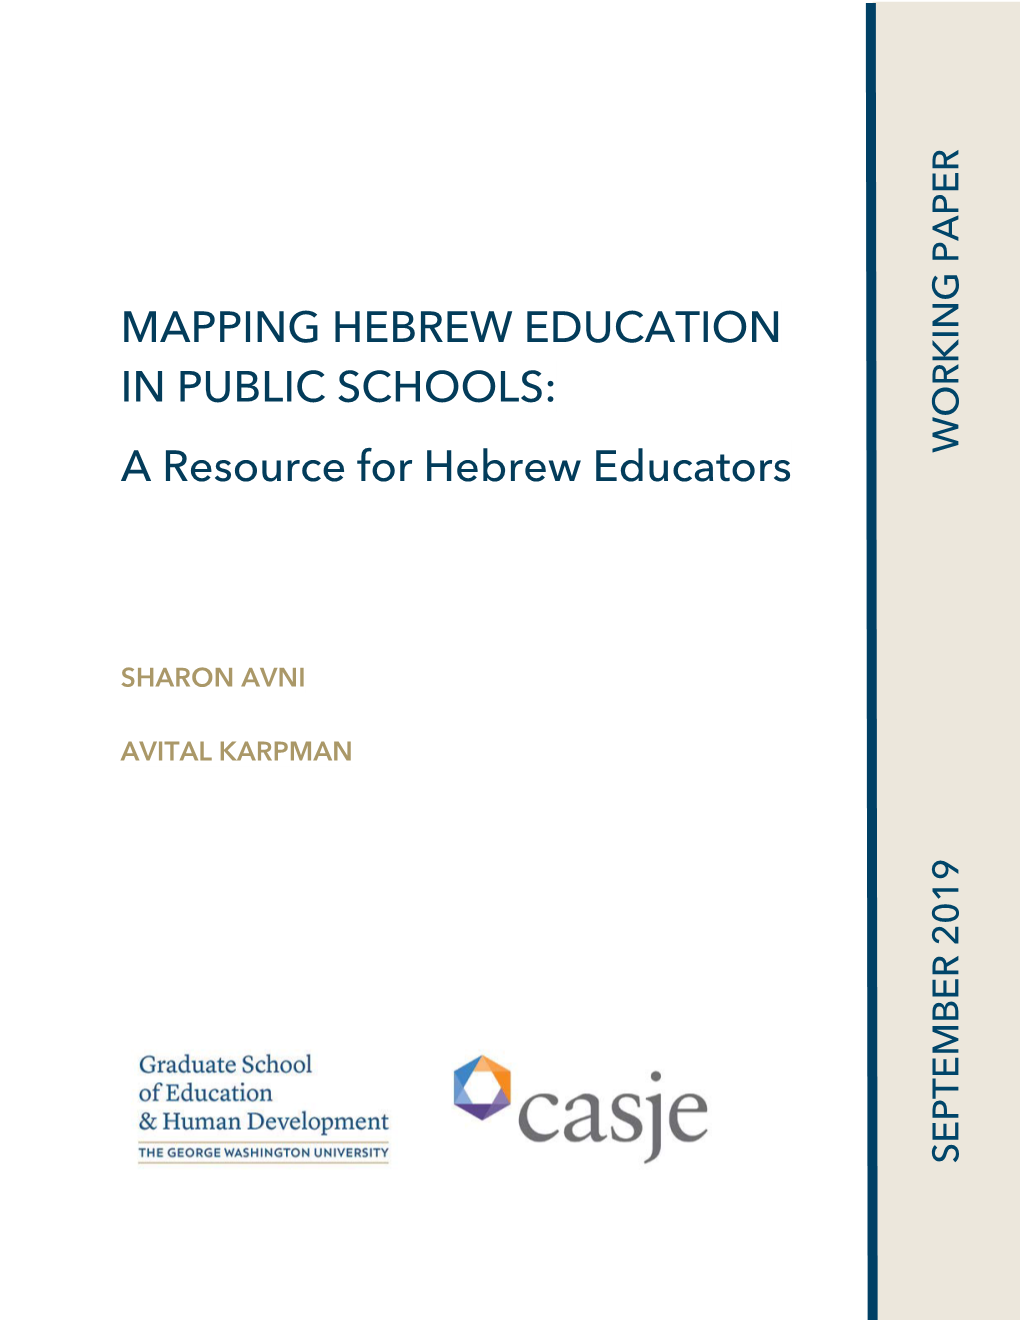 Mapping Hebrew Education in Public Schools